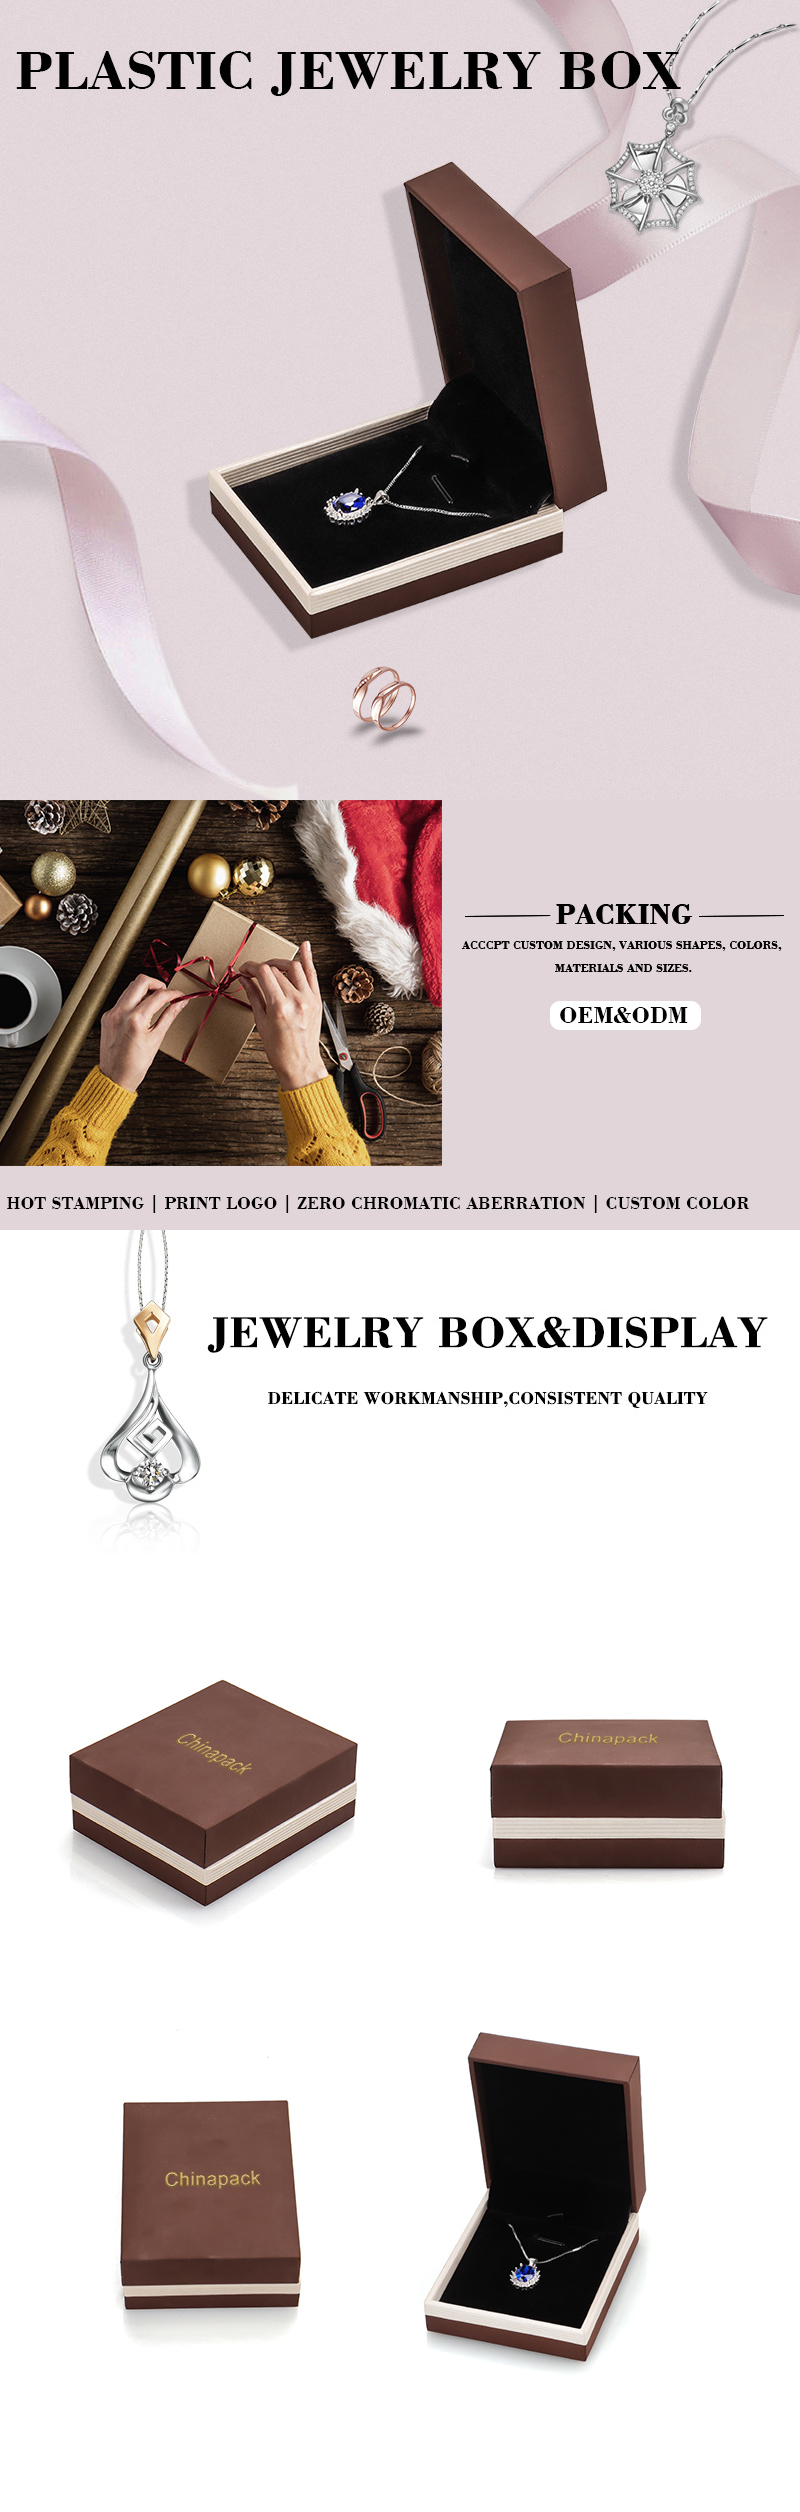 Custom printed jewelry box